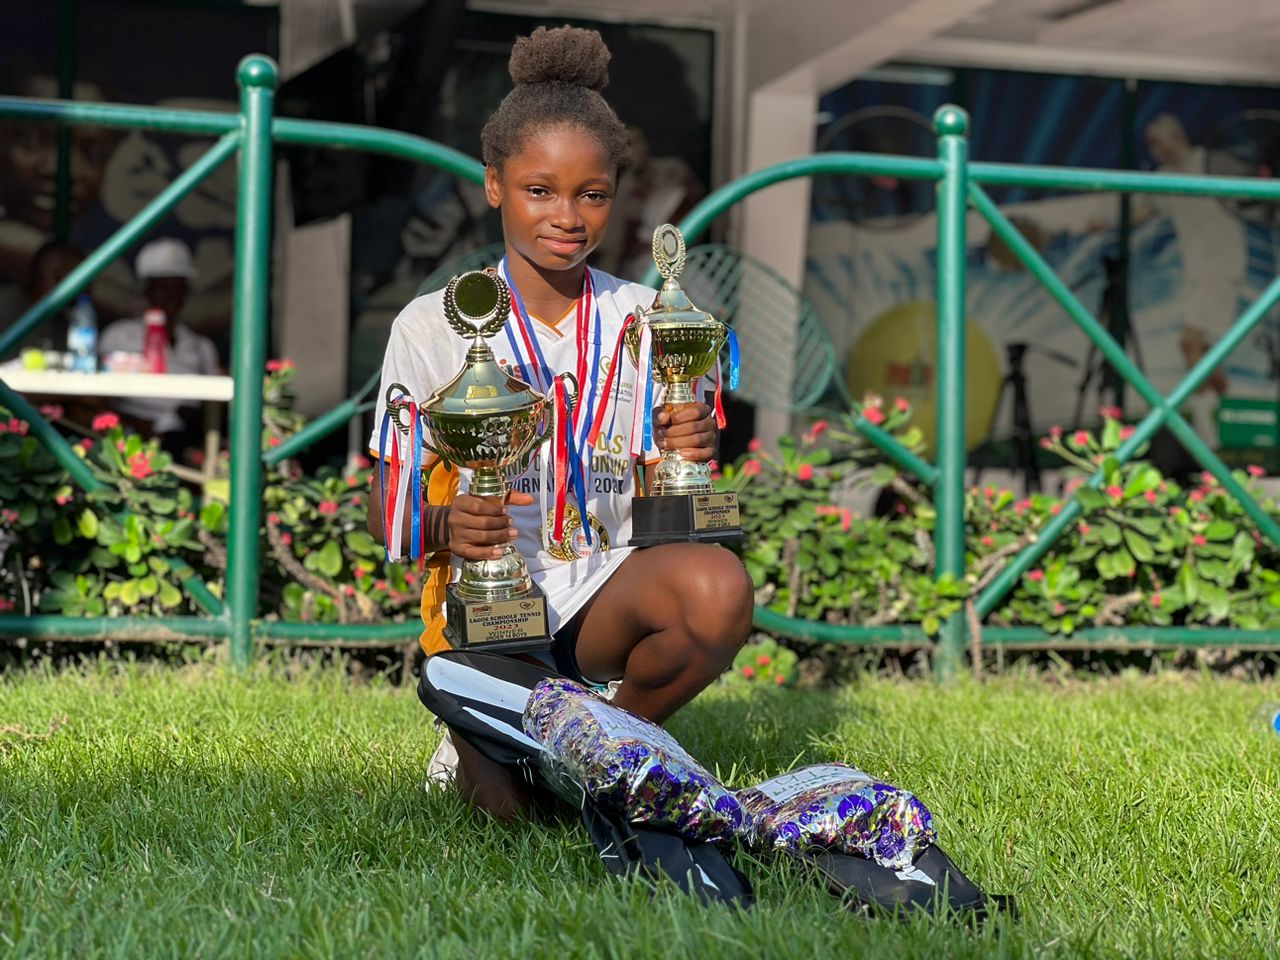 Double Champion Rose Nana Rules Lagos Schools’ Tennis Championship